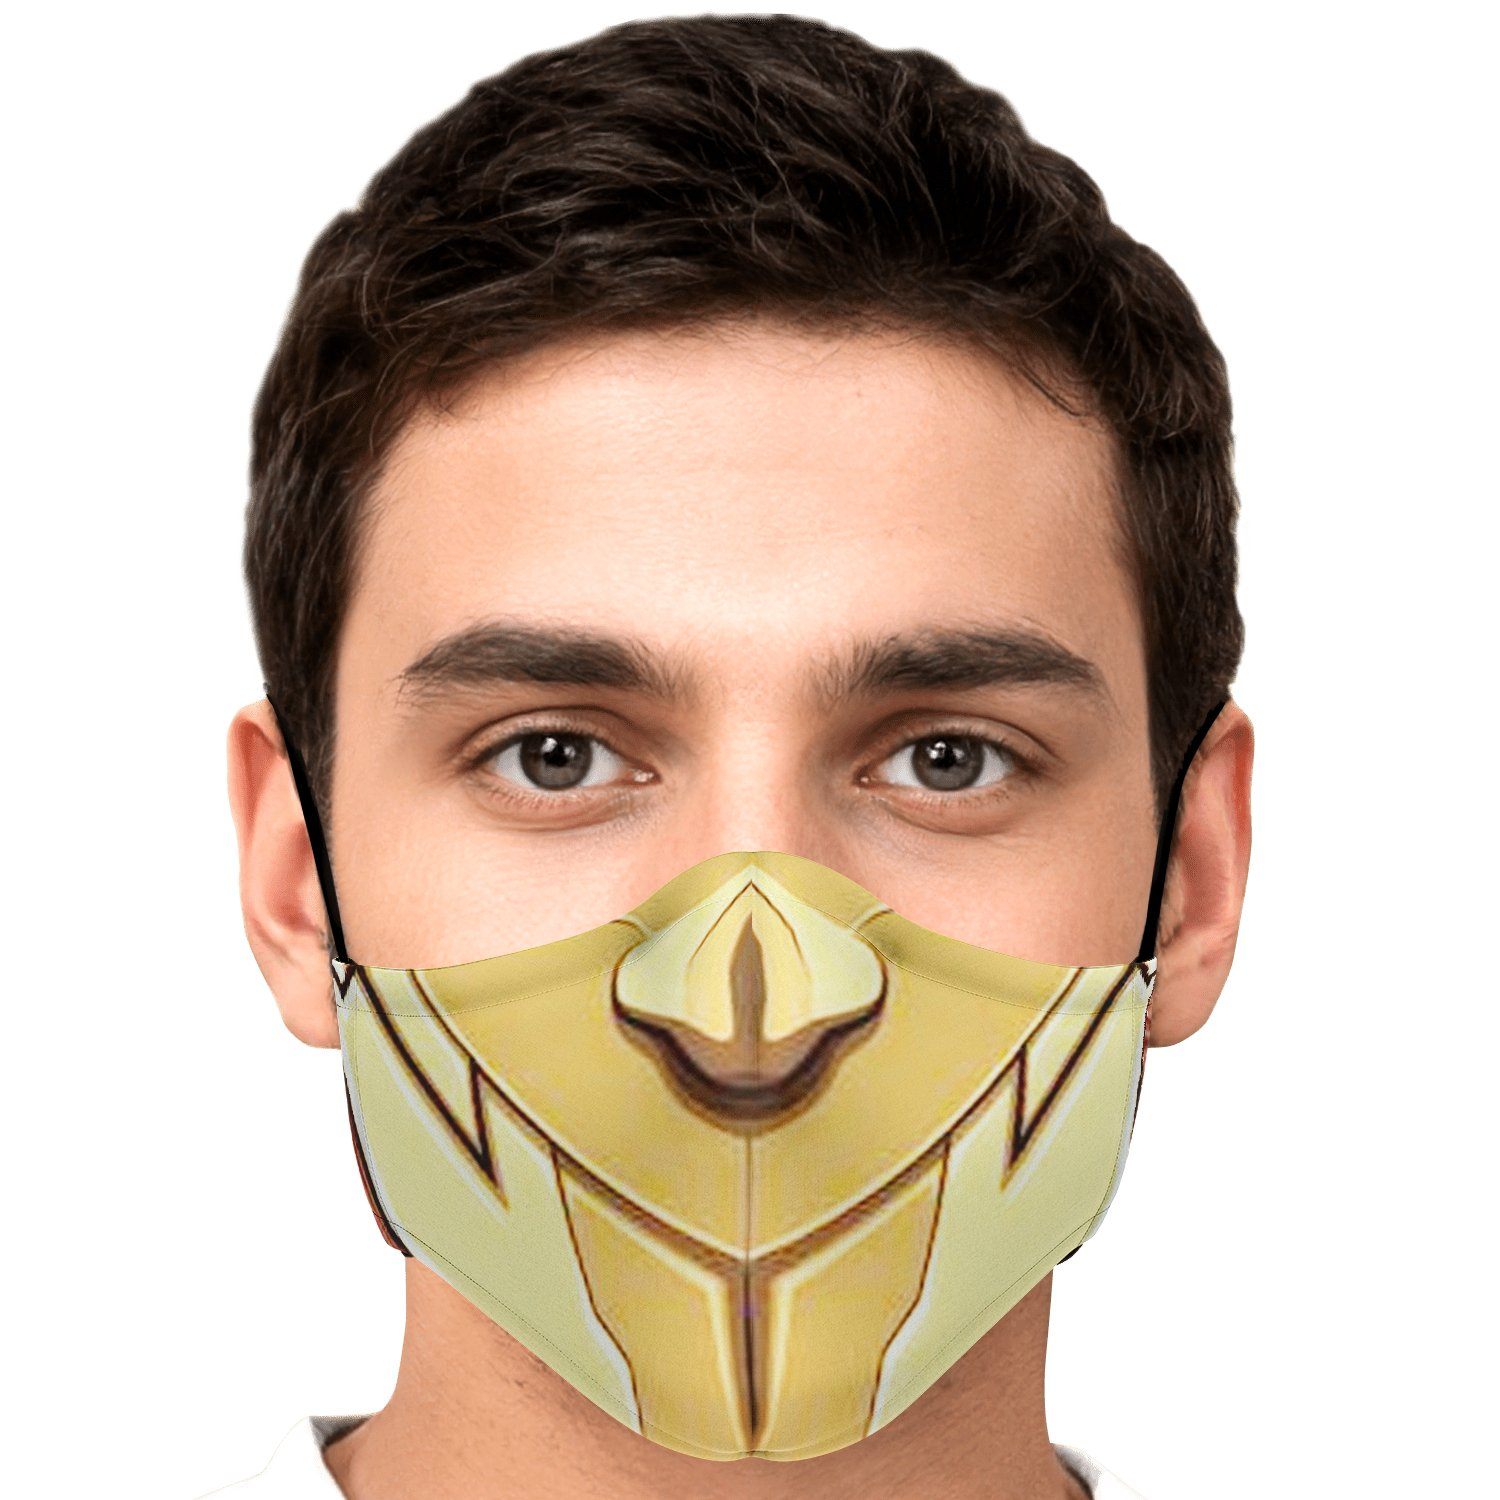 armored titan attack on titan premium carbon filter face mask 768015 - Attack On Titan Shop